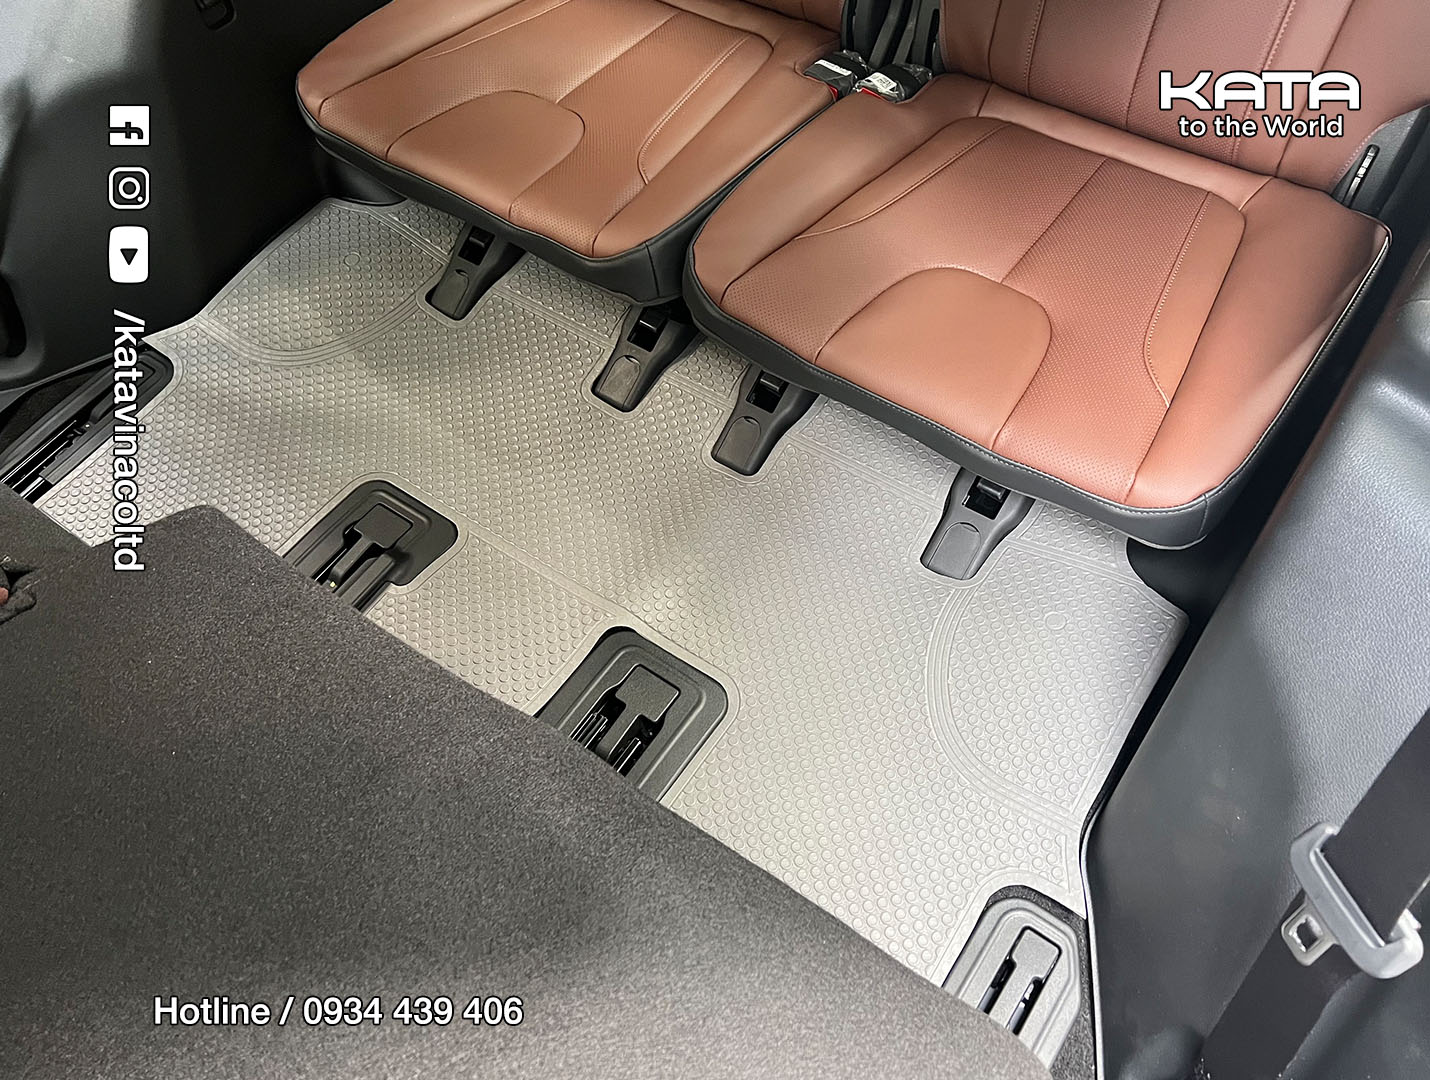 Thảm lót sàn Hyundai Santafe bản KATA Pro 2022